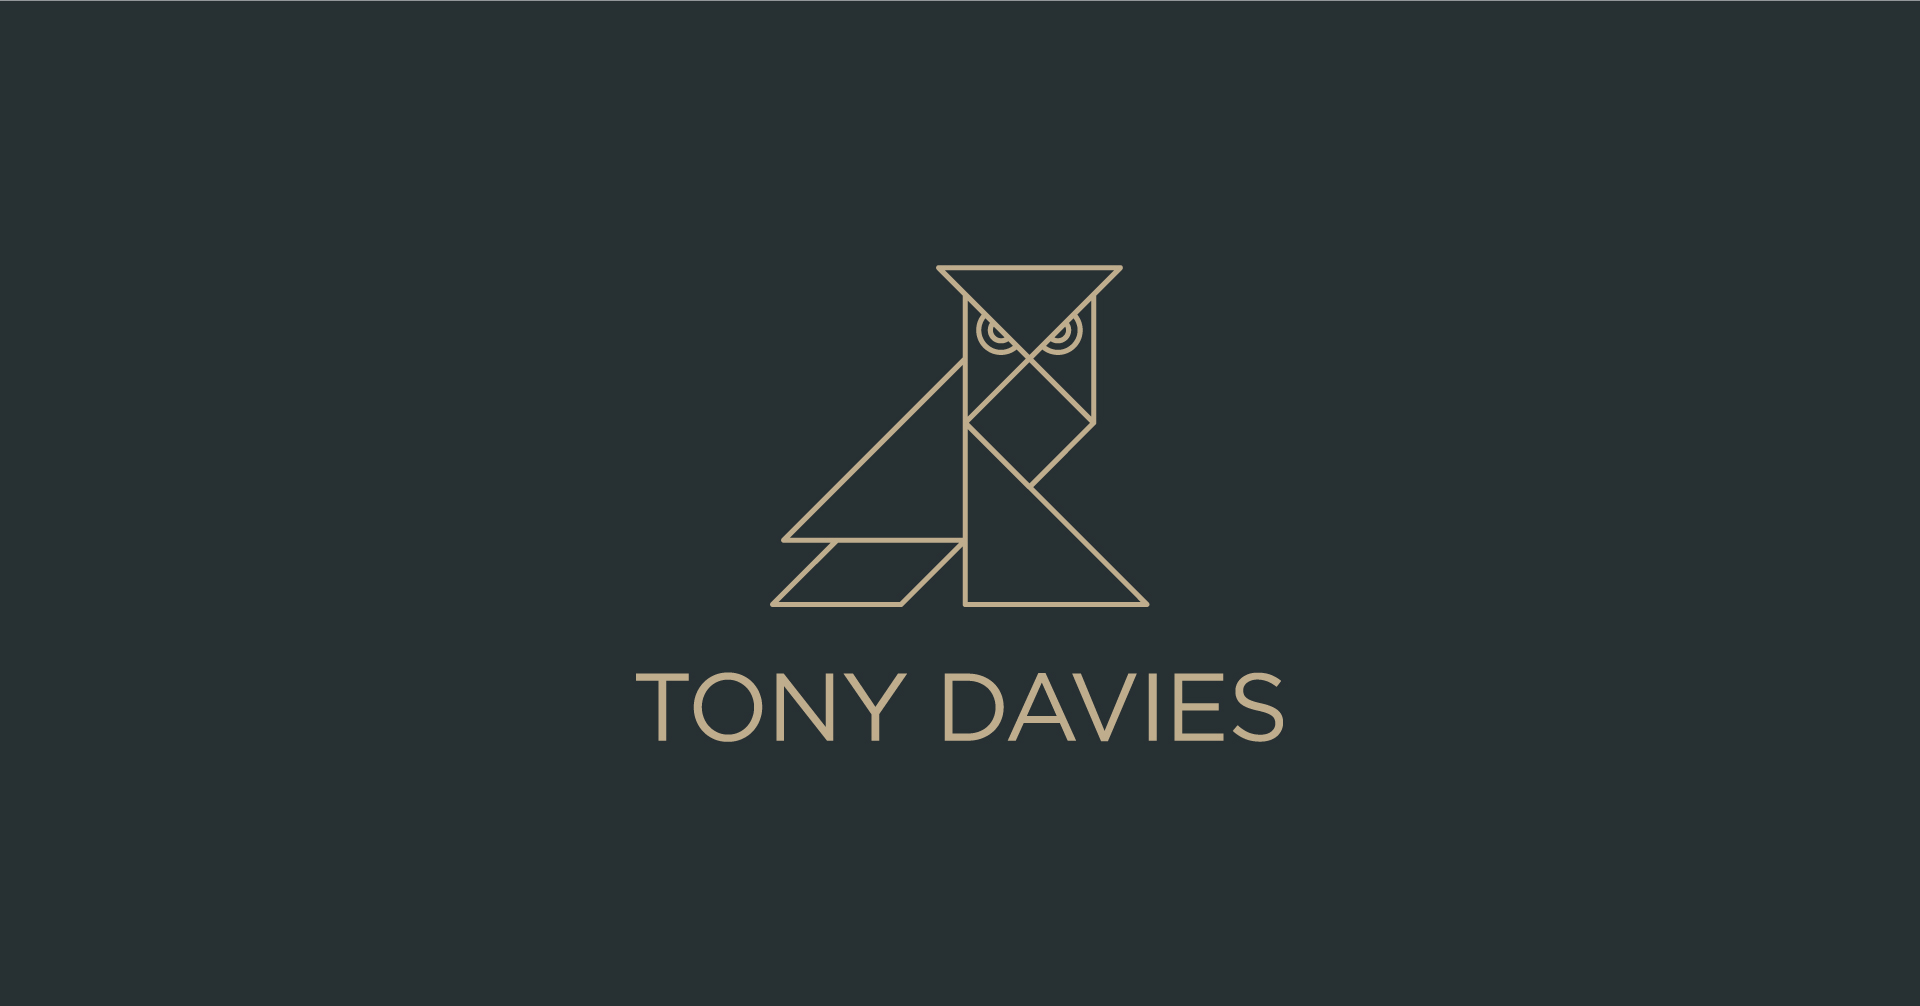 Tony Davies